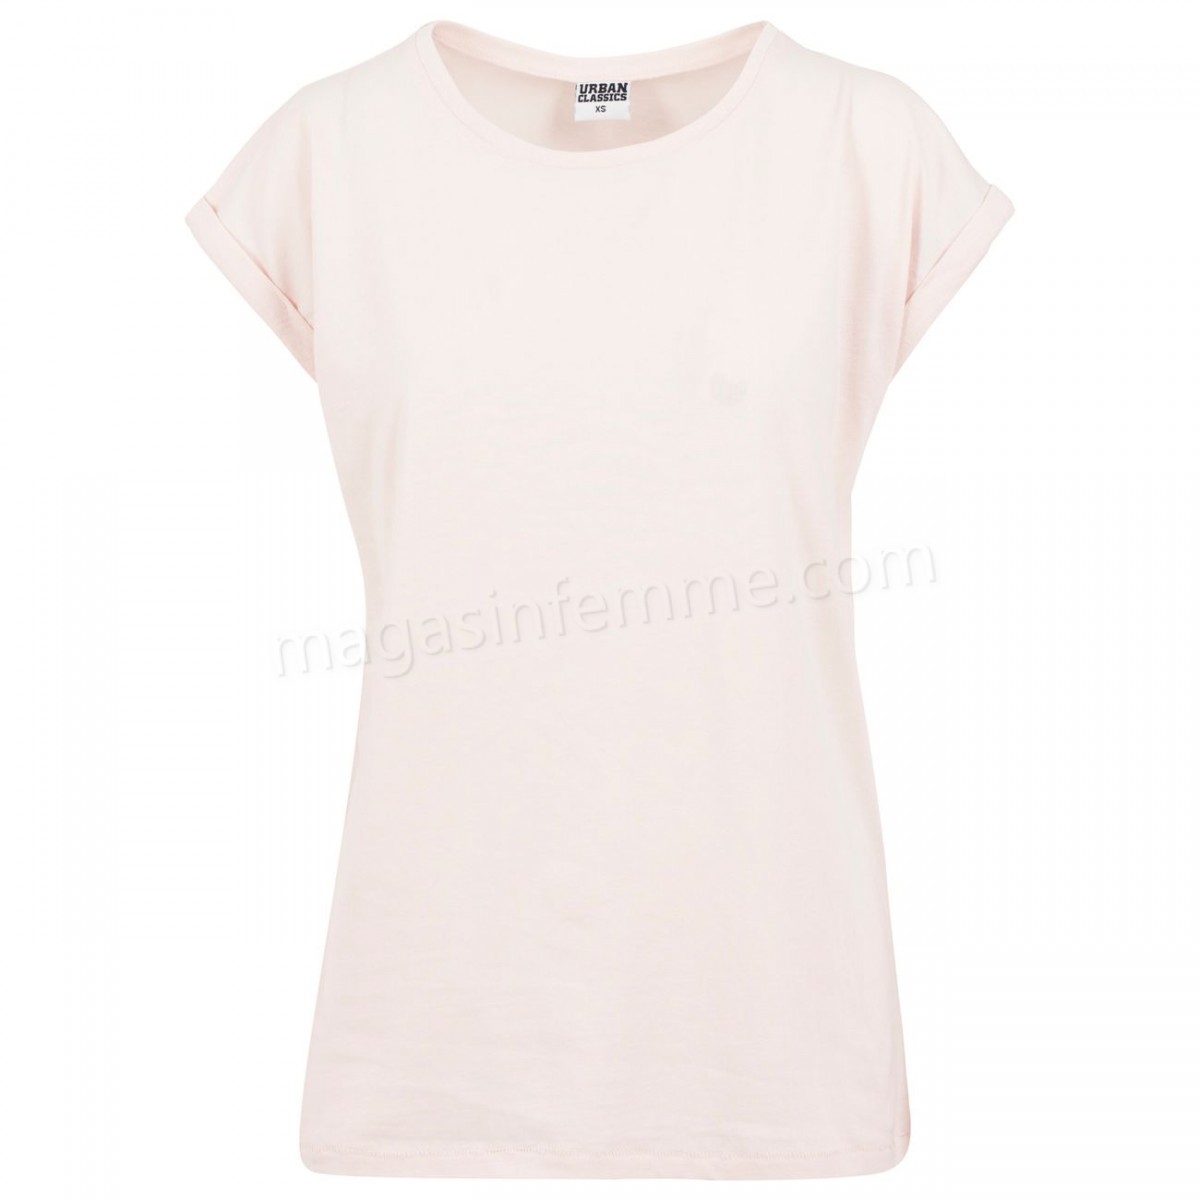 Urban Classics-Mode- Lifestyle femme URBAN CLASSICS T-shirt Rose Urban Classics Epaule Tombante en solde - -6